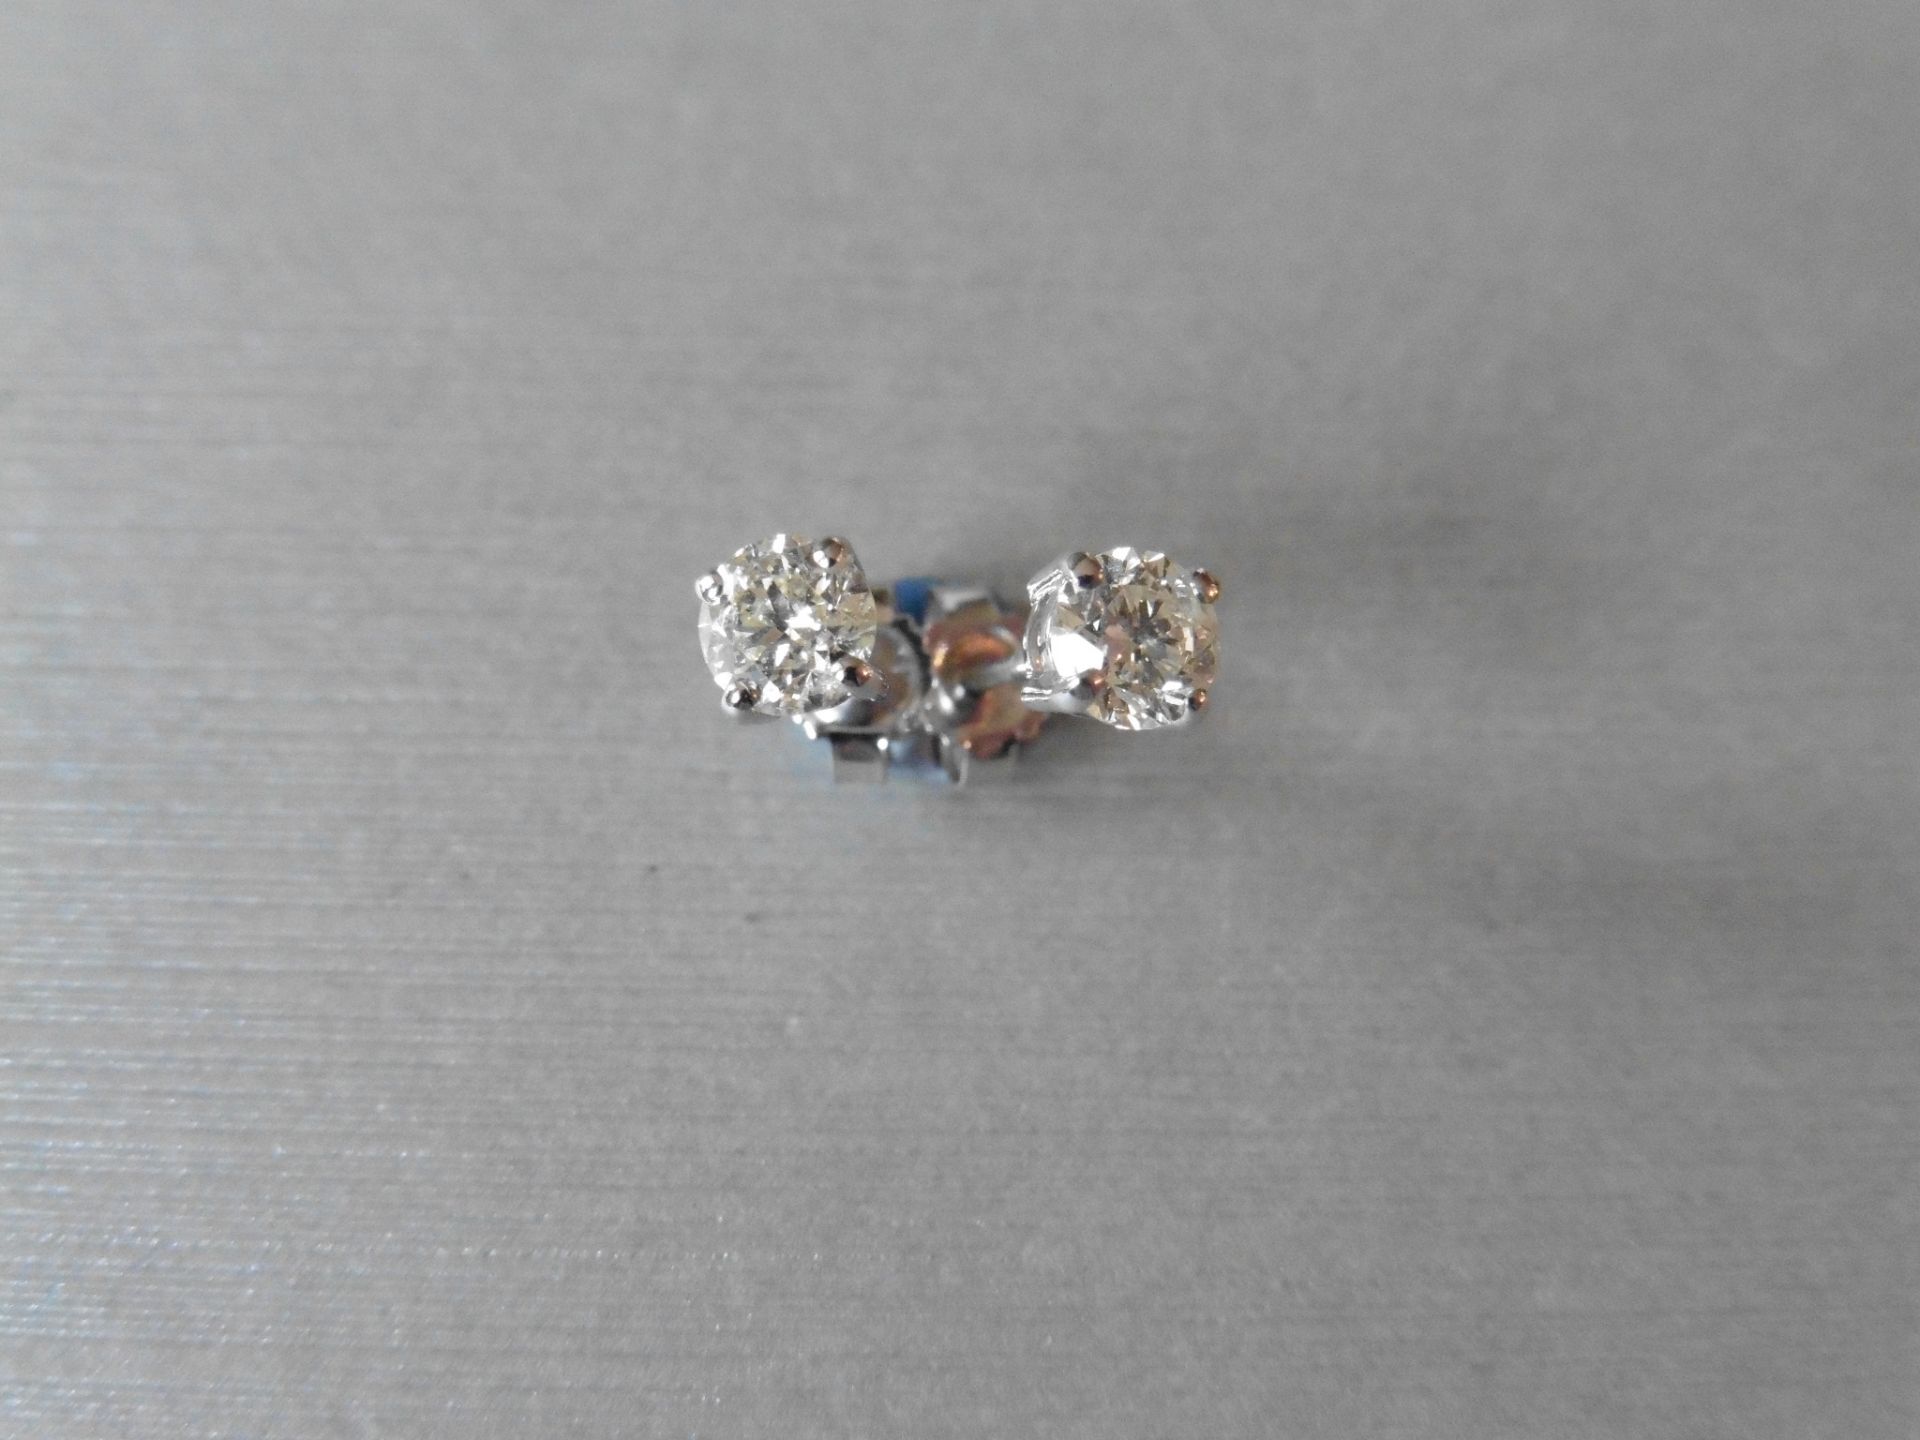 0.80ct Diamond solitaire earrings set with brilliant cut diamonds, I/J colour SI2 clarity. Four claw